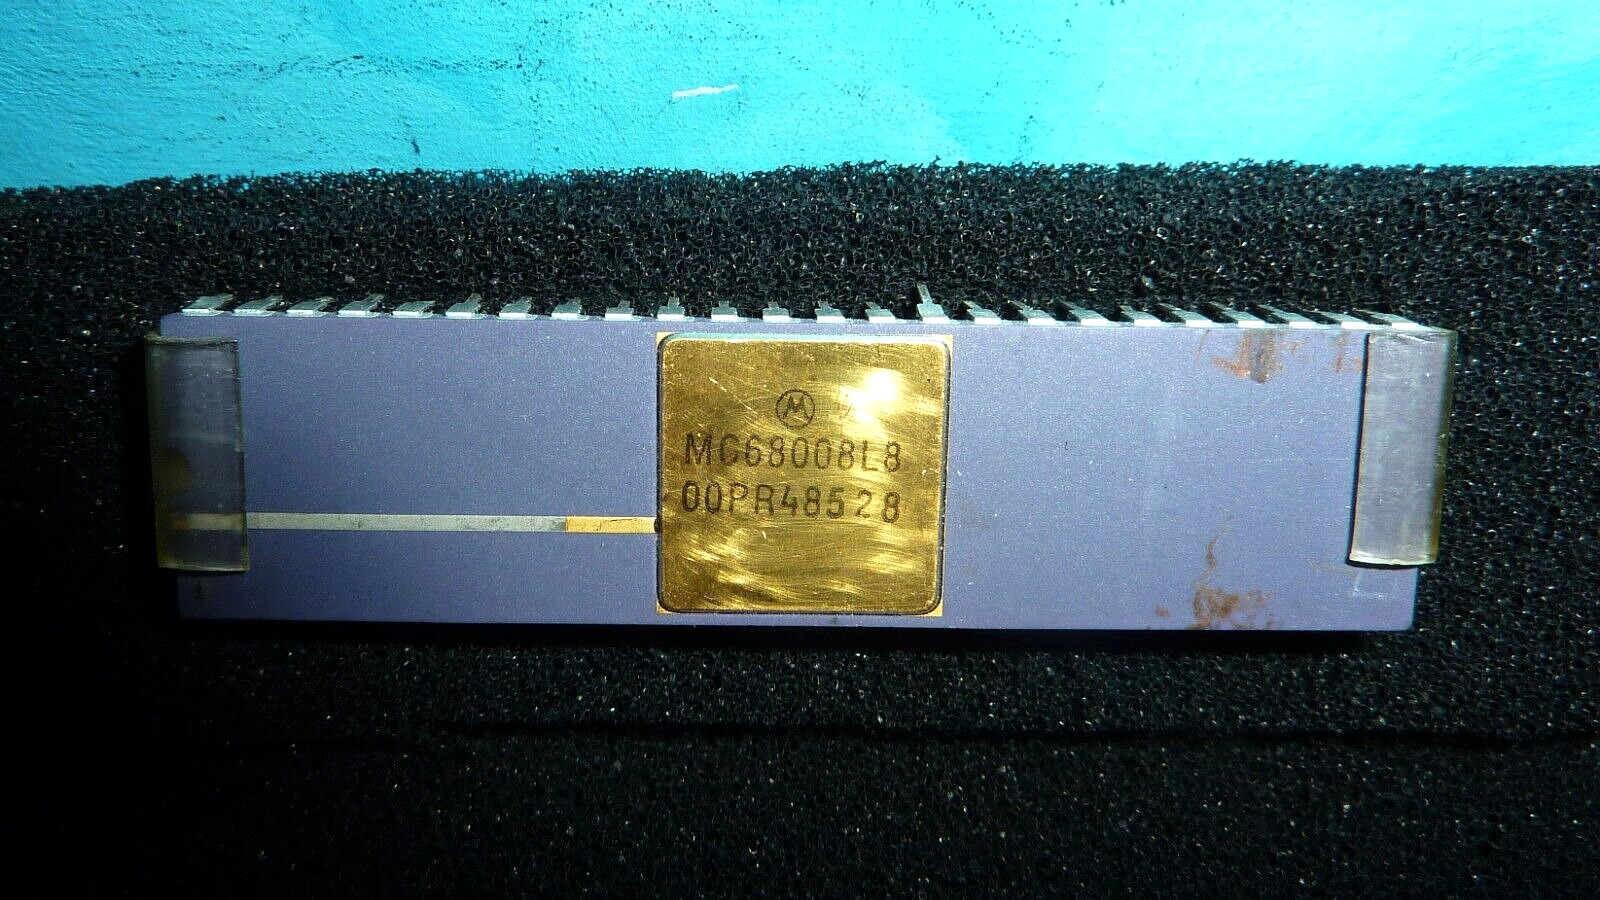 Motorola MC68008L8 Purple Ceramic/Gold DIP Collectible Microprocessor-